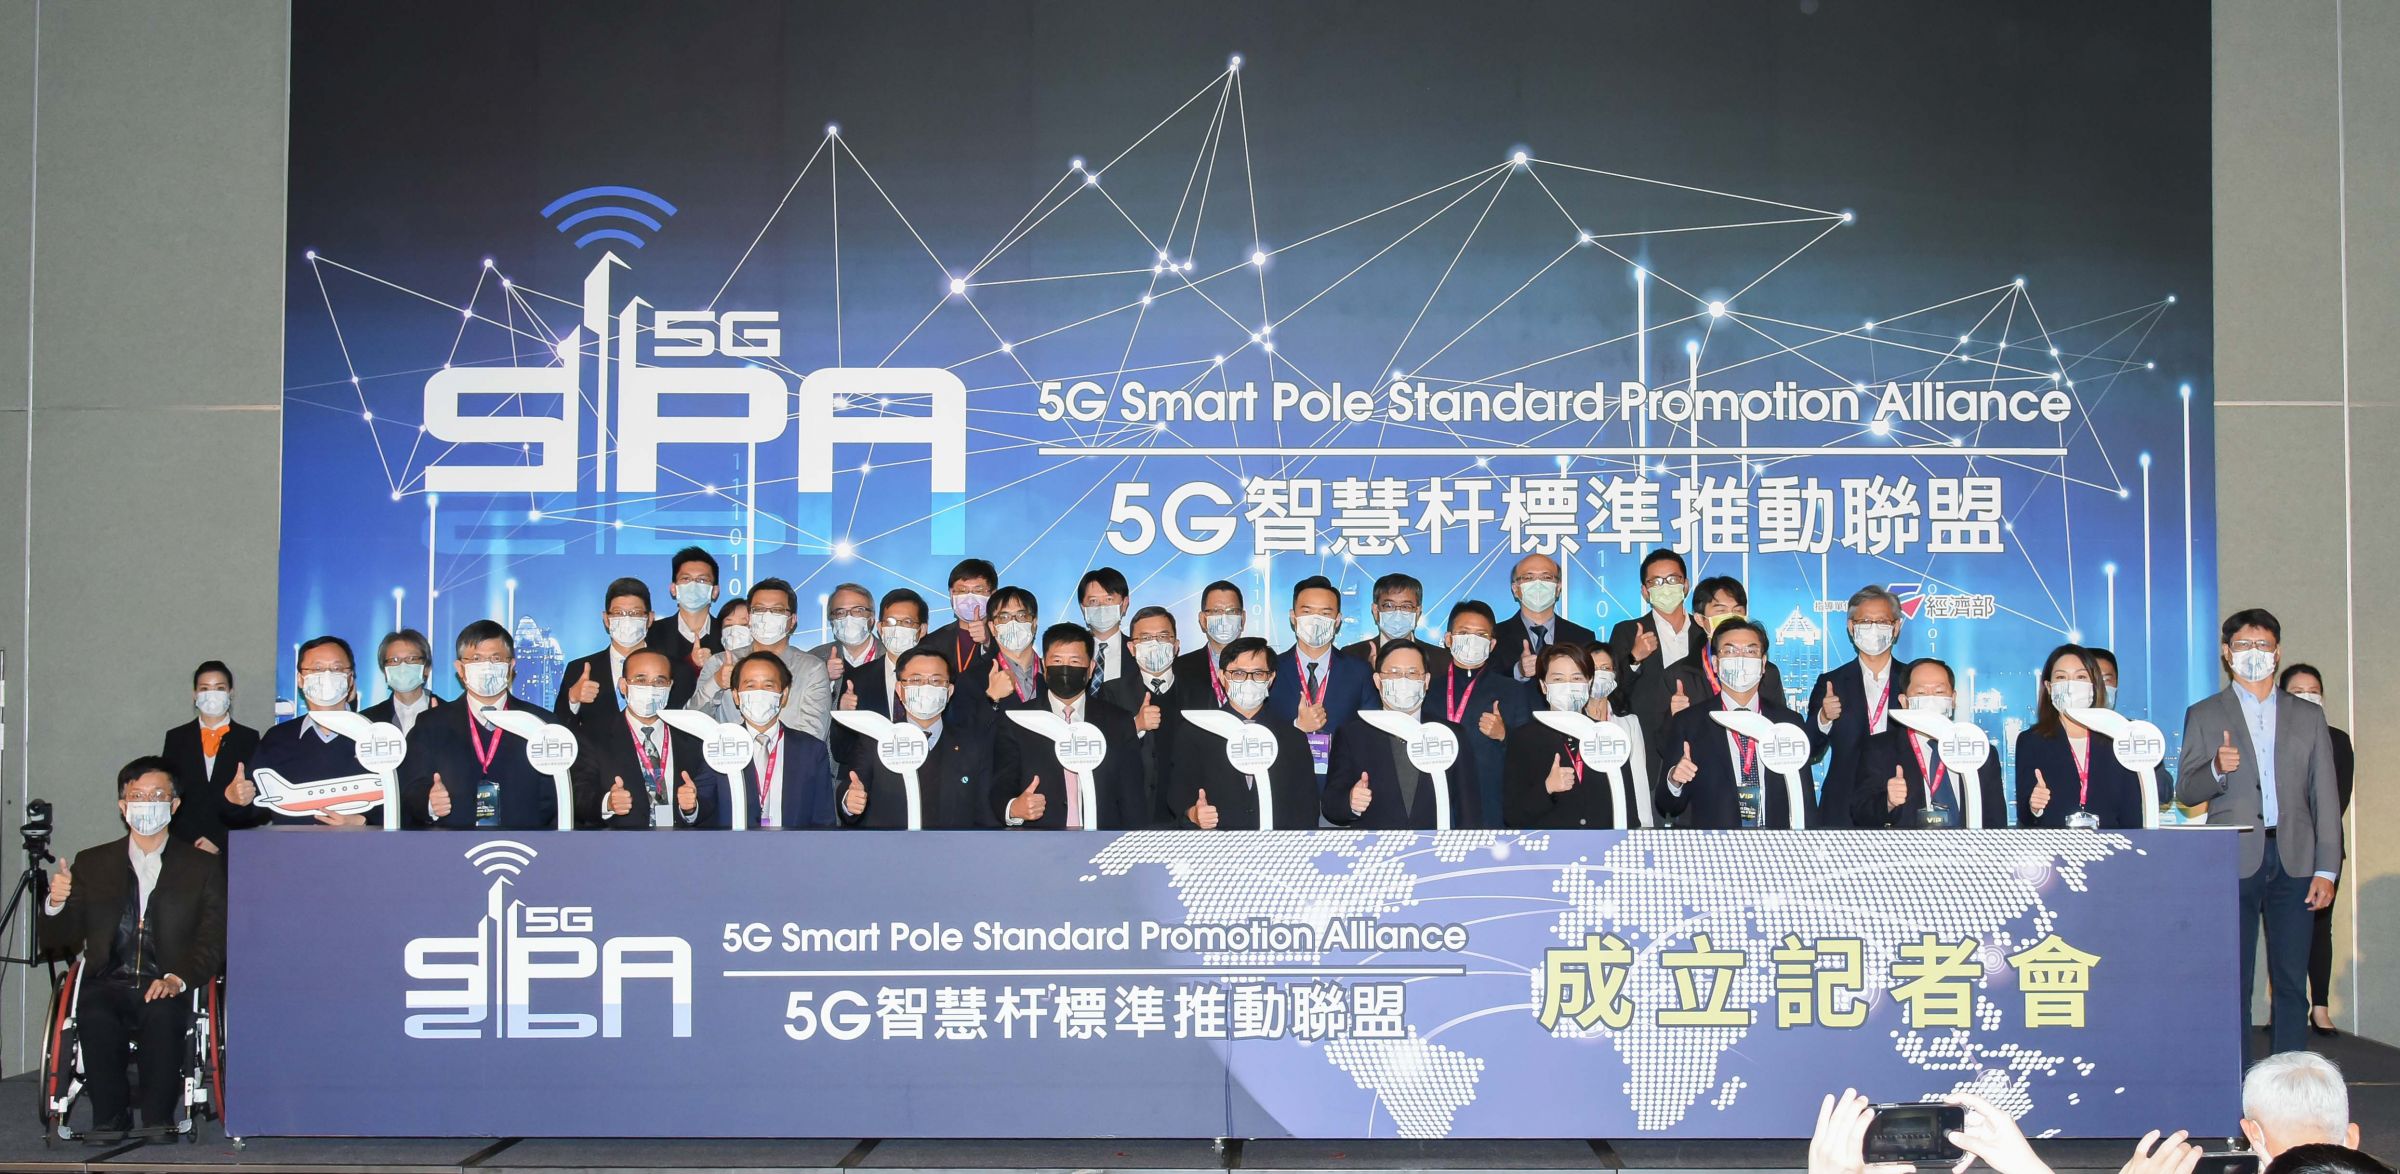 Proscendは、5G Smart Pole Standard Promotion Allianceの記者会見に出席しました。